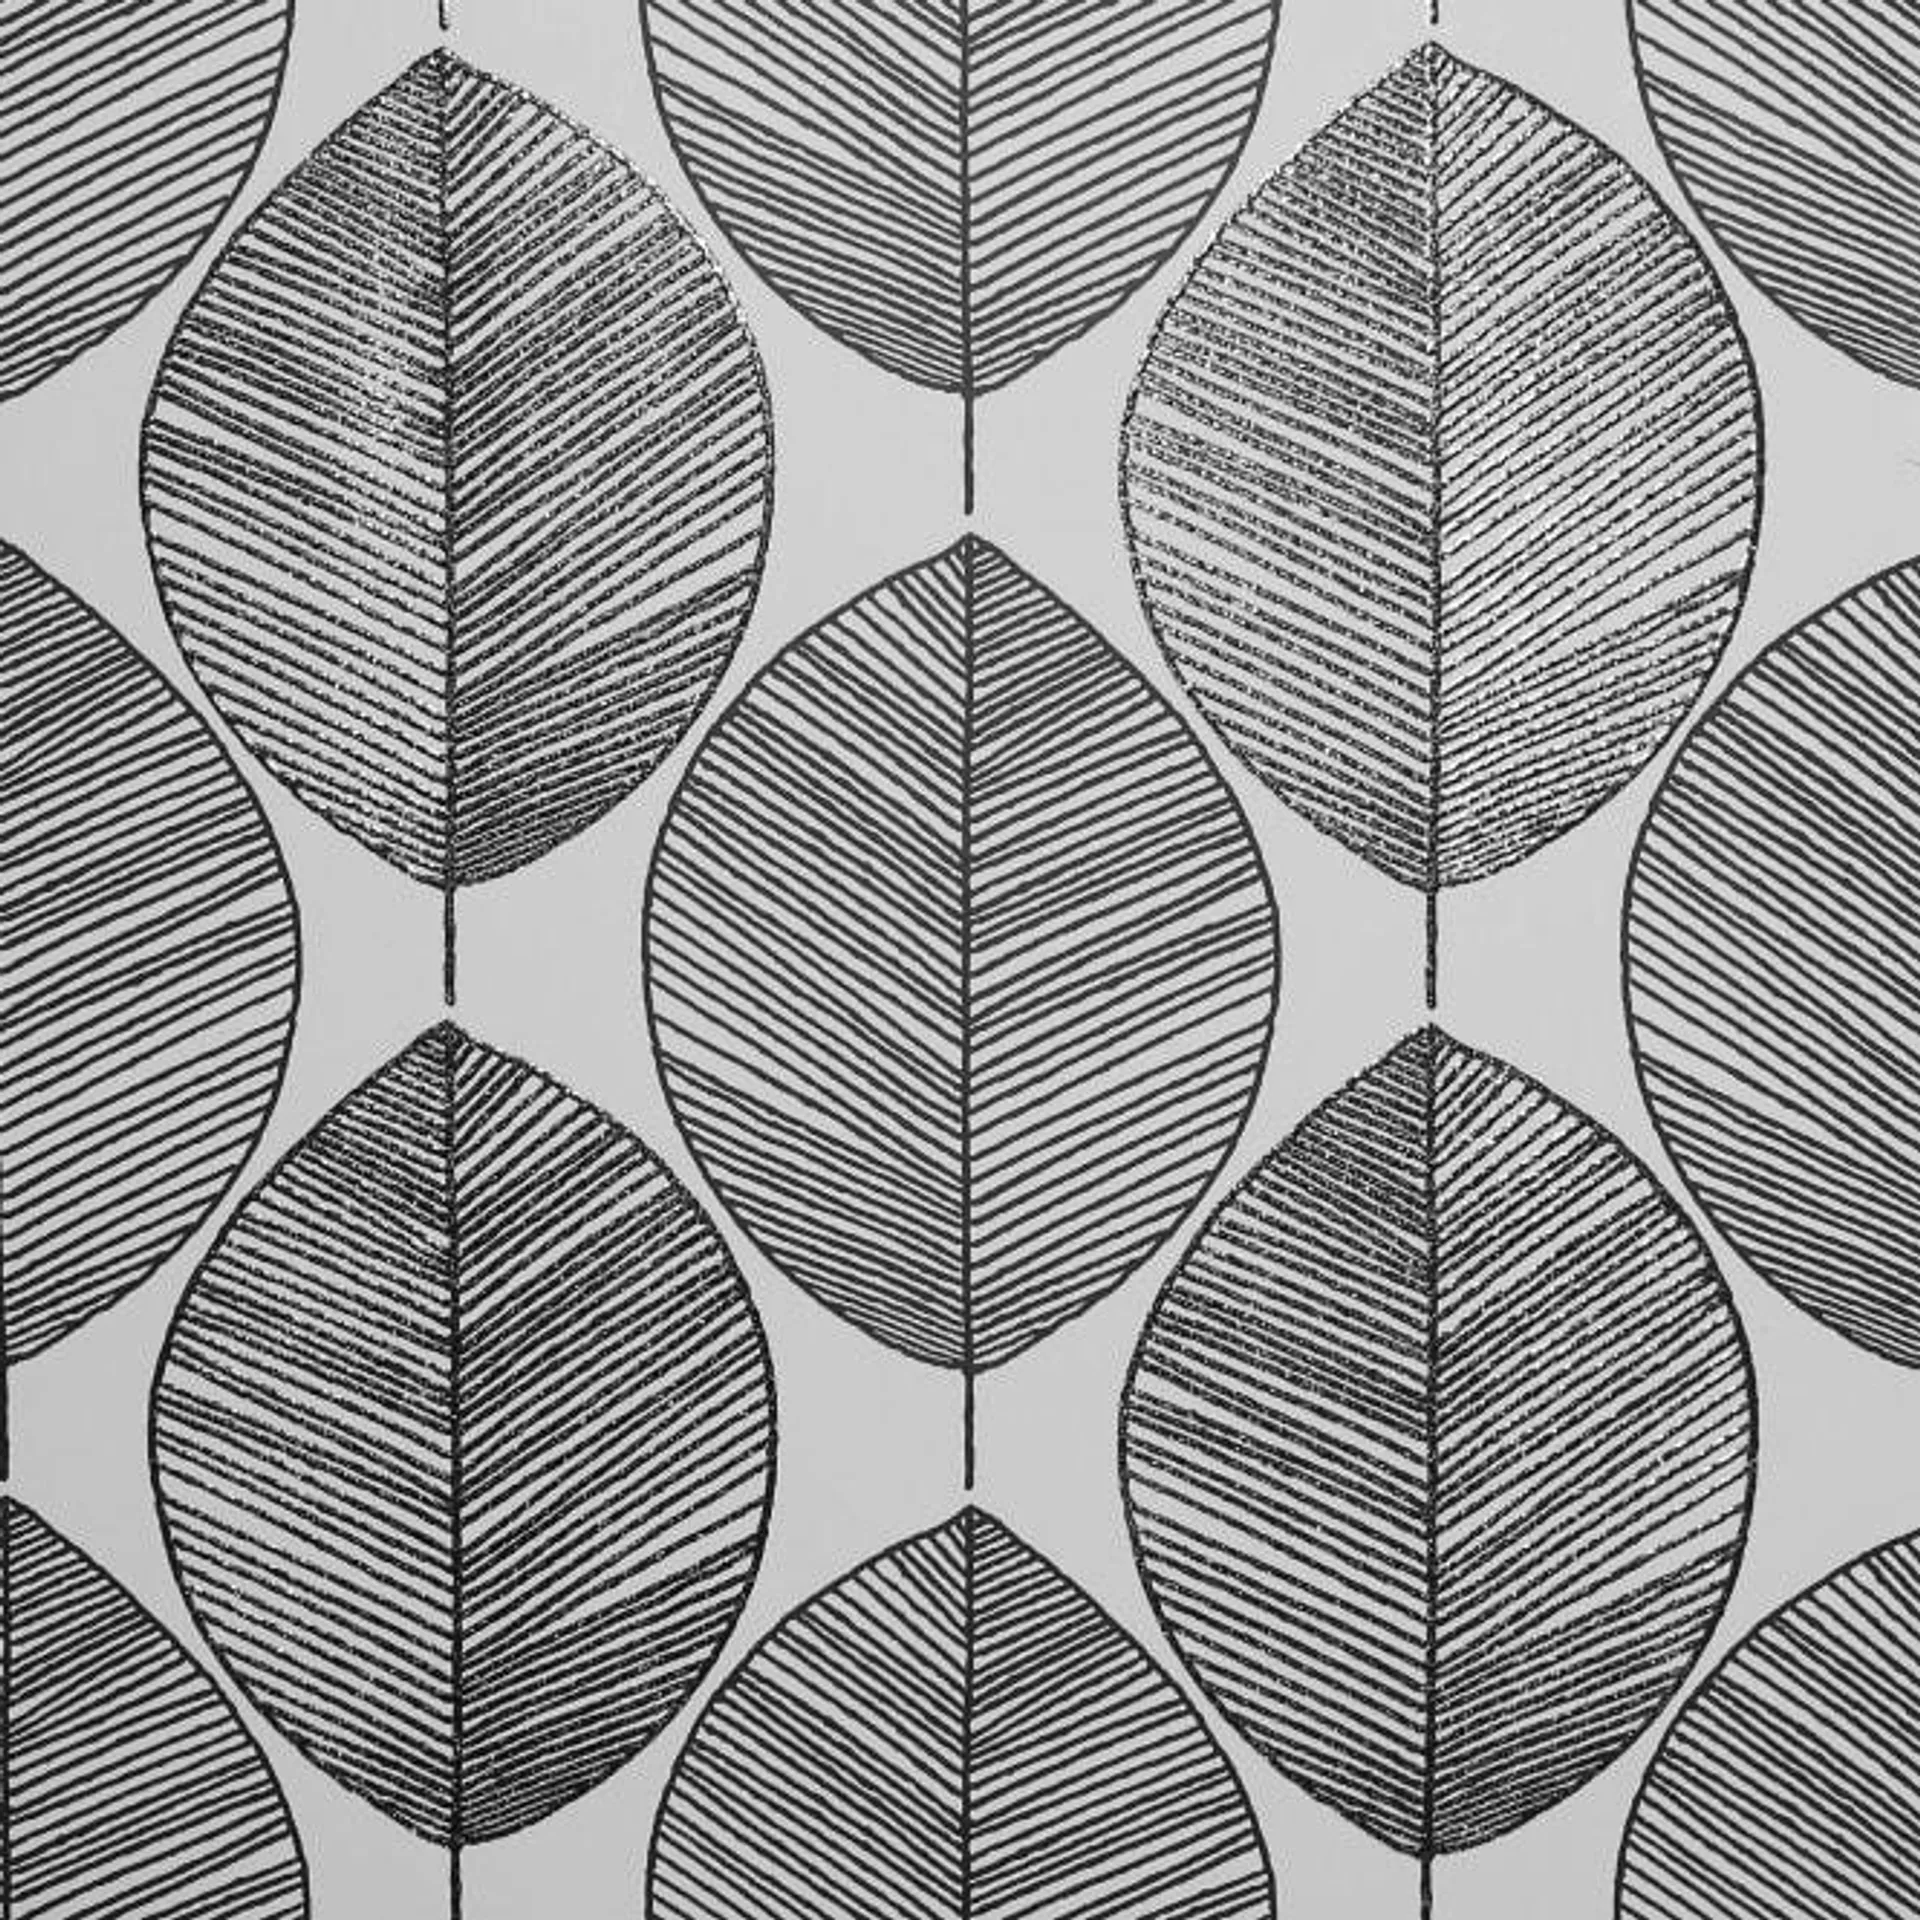 Scandi Leaf wallpaper in Black, White